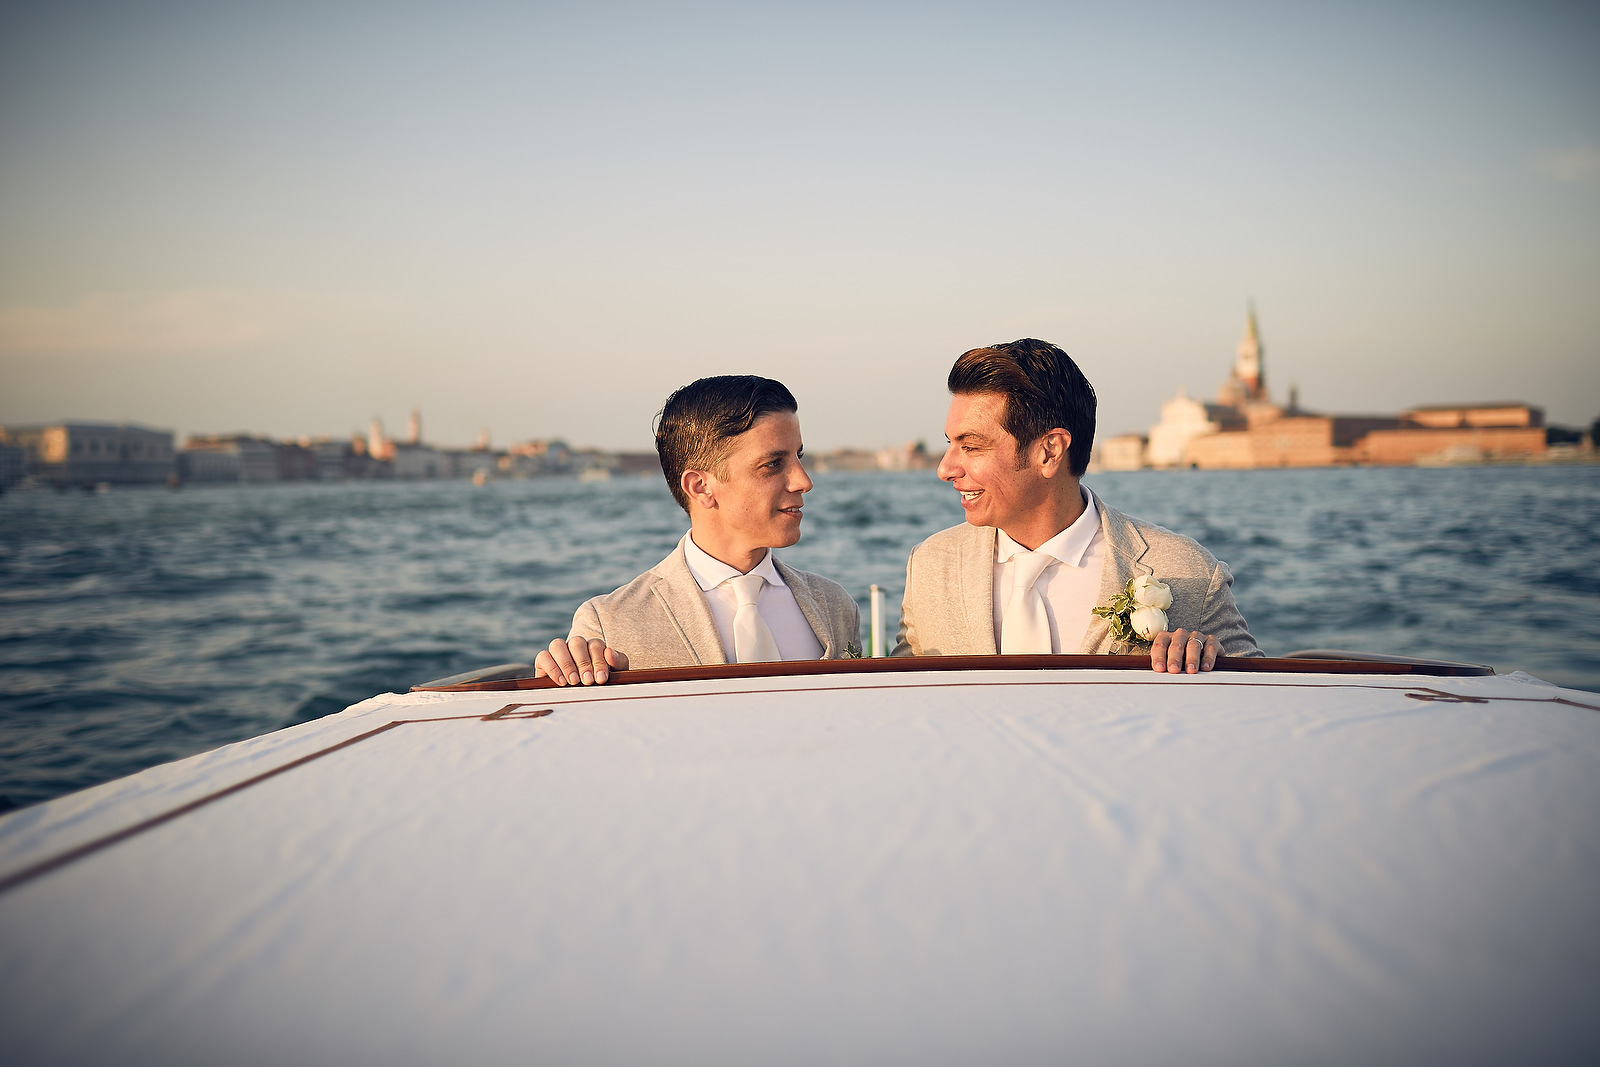 wedding photographer Venice